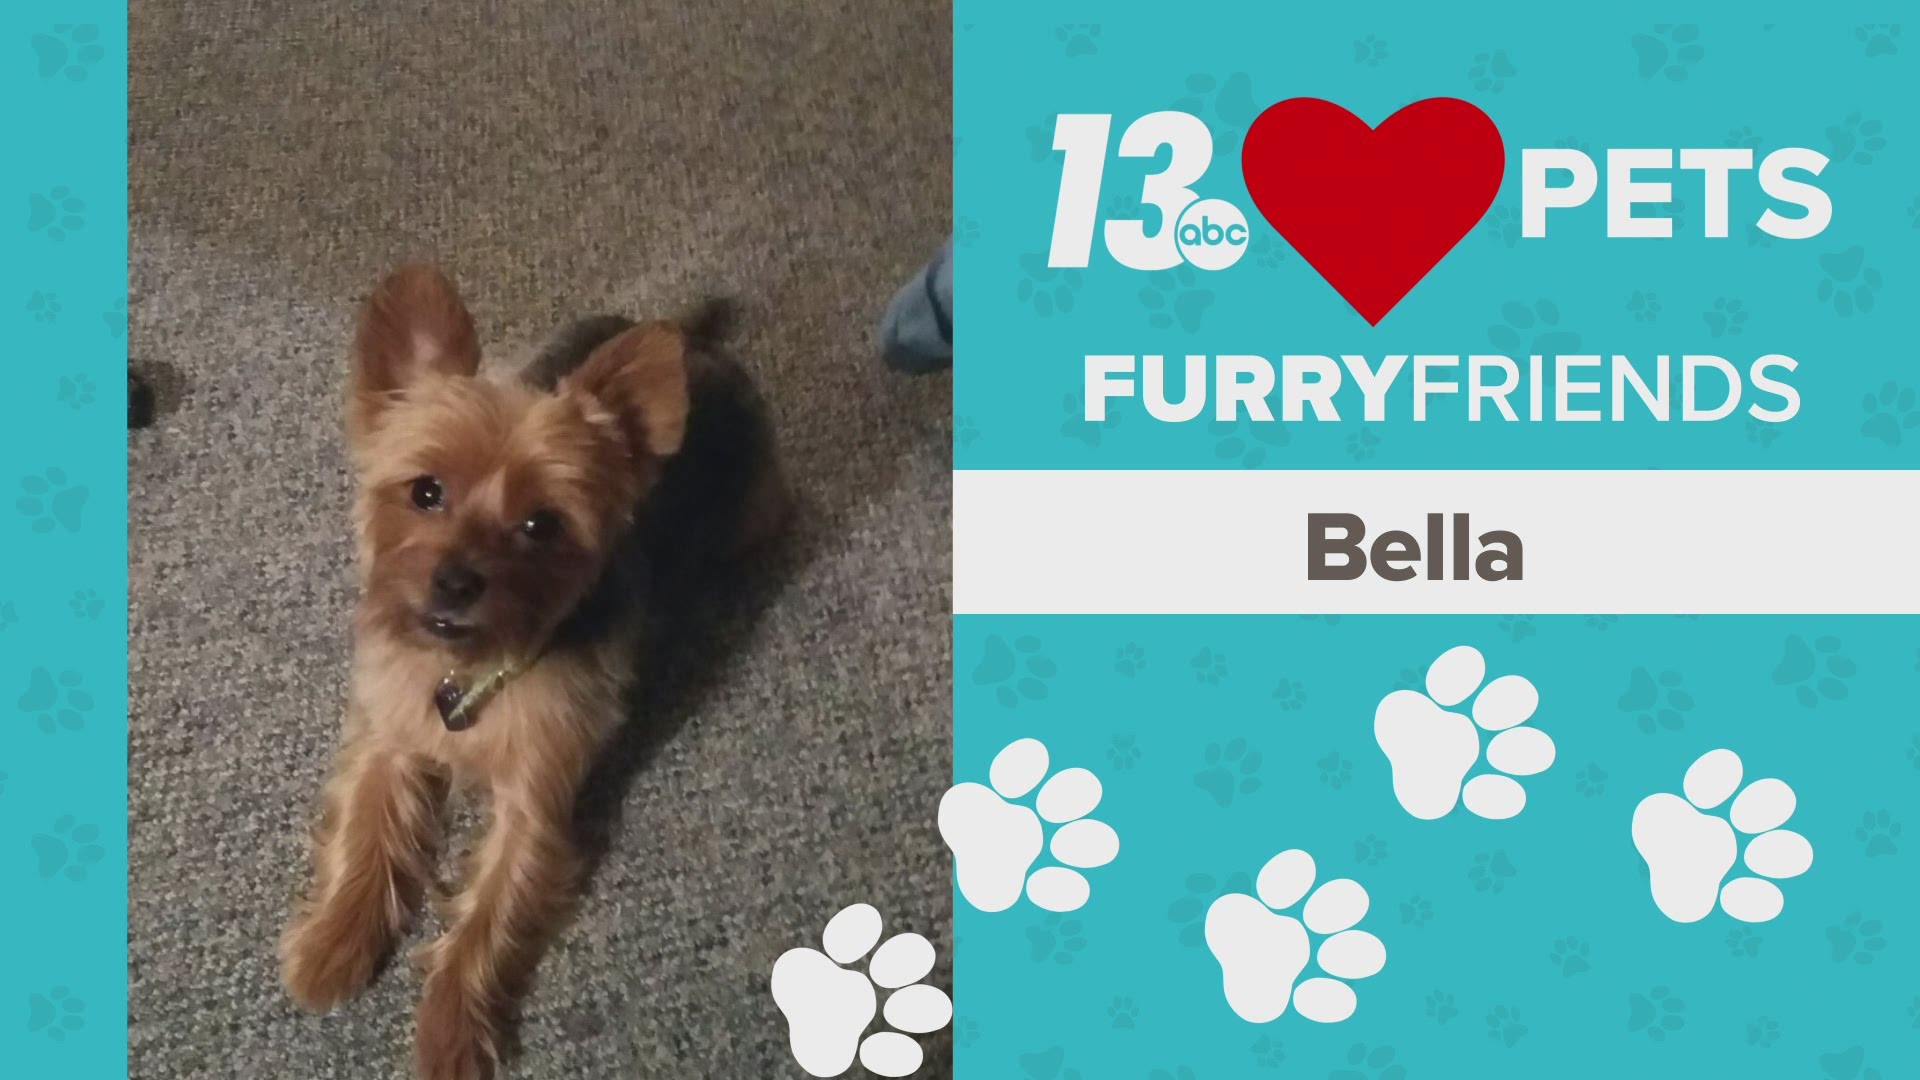 Monday's Furry Friend was Bella!